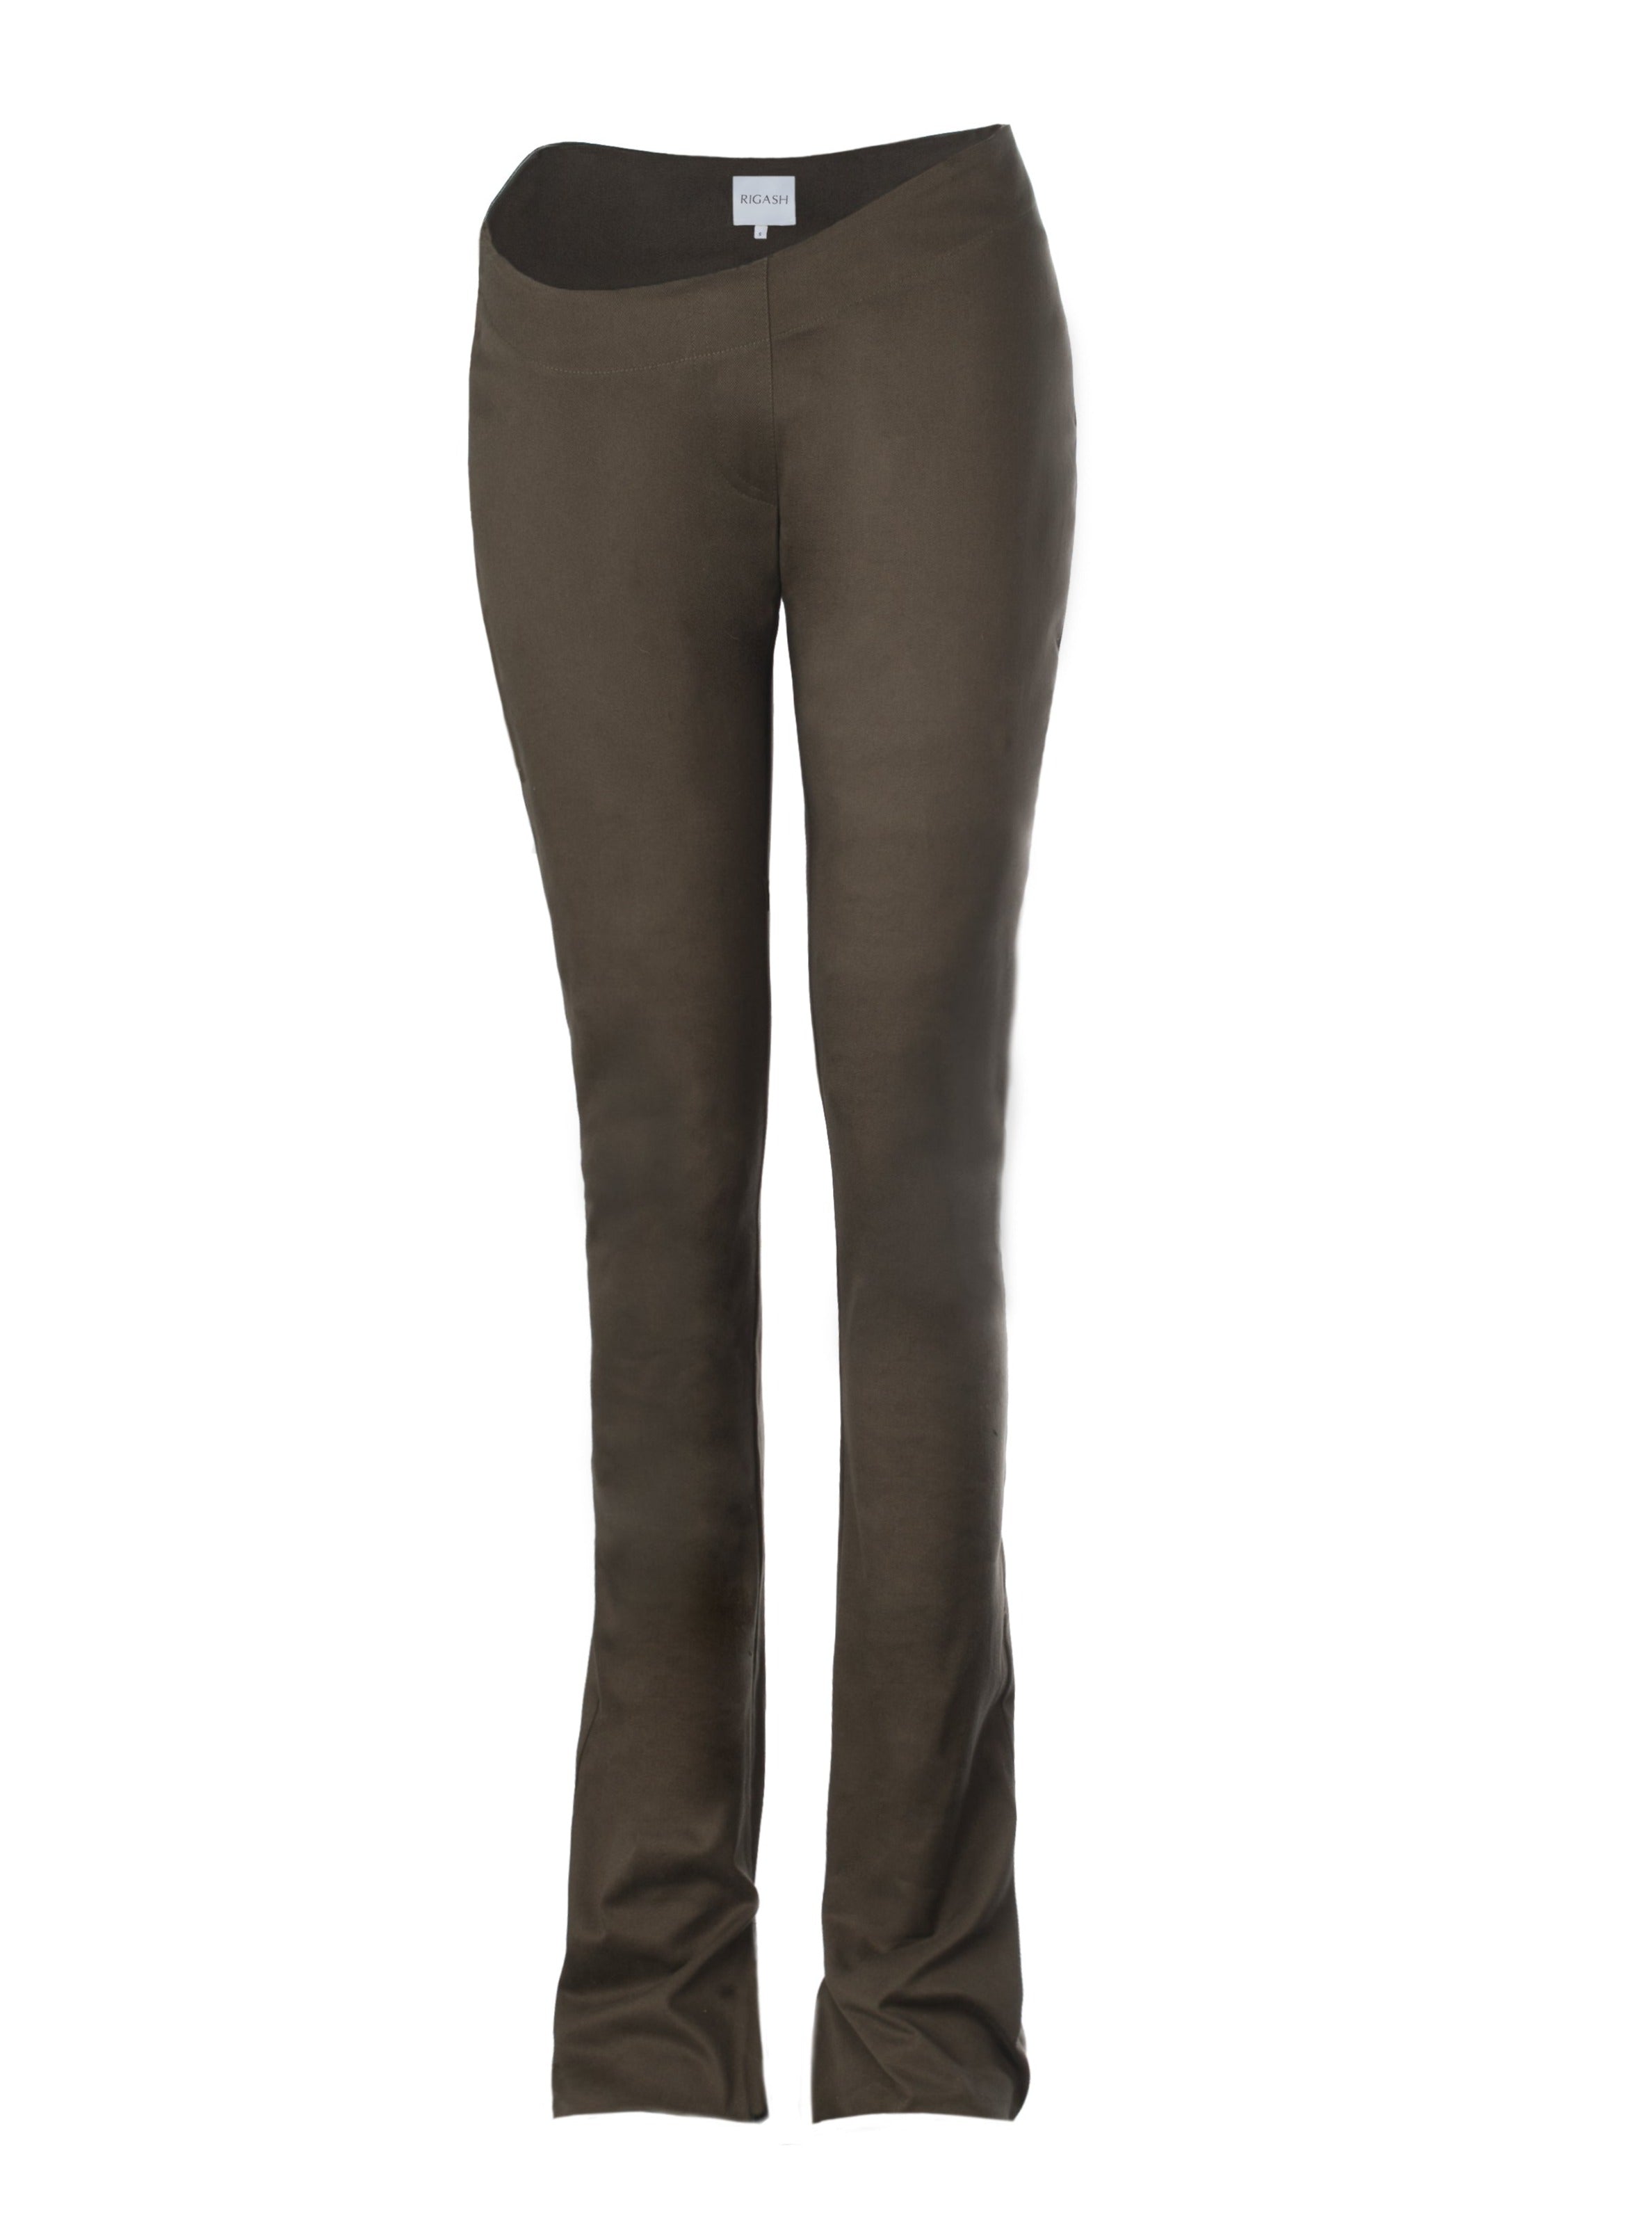 Asymmetrical low waist kick-flare trousers in olive green cotton gabardine. Inseam slit with zip fastening.